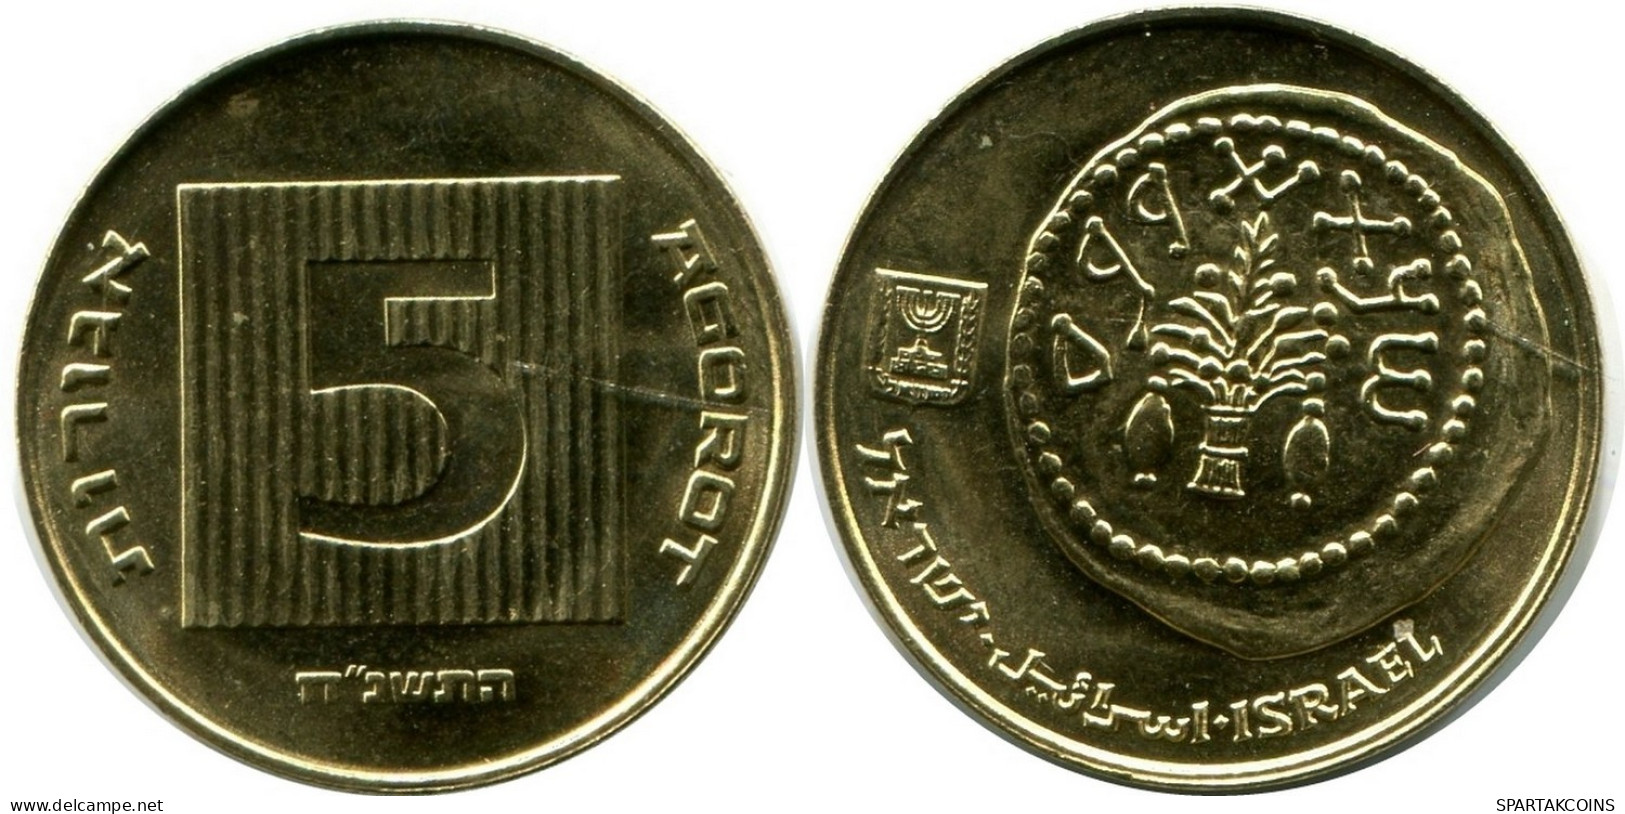 5 AGOROT ISRAEL UNC Coin #M10342.U.A - Israele